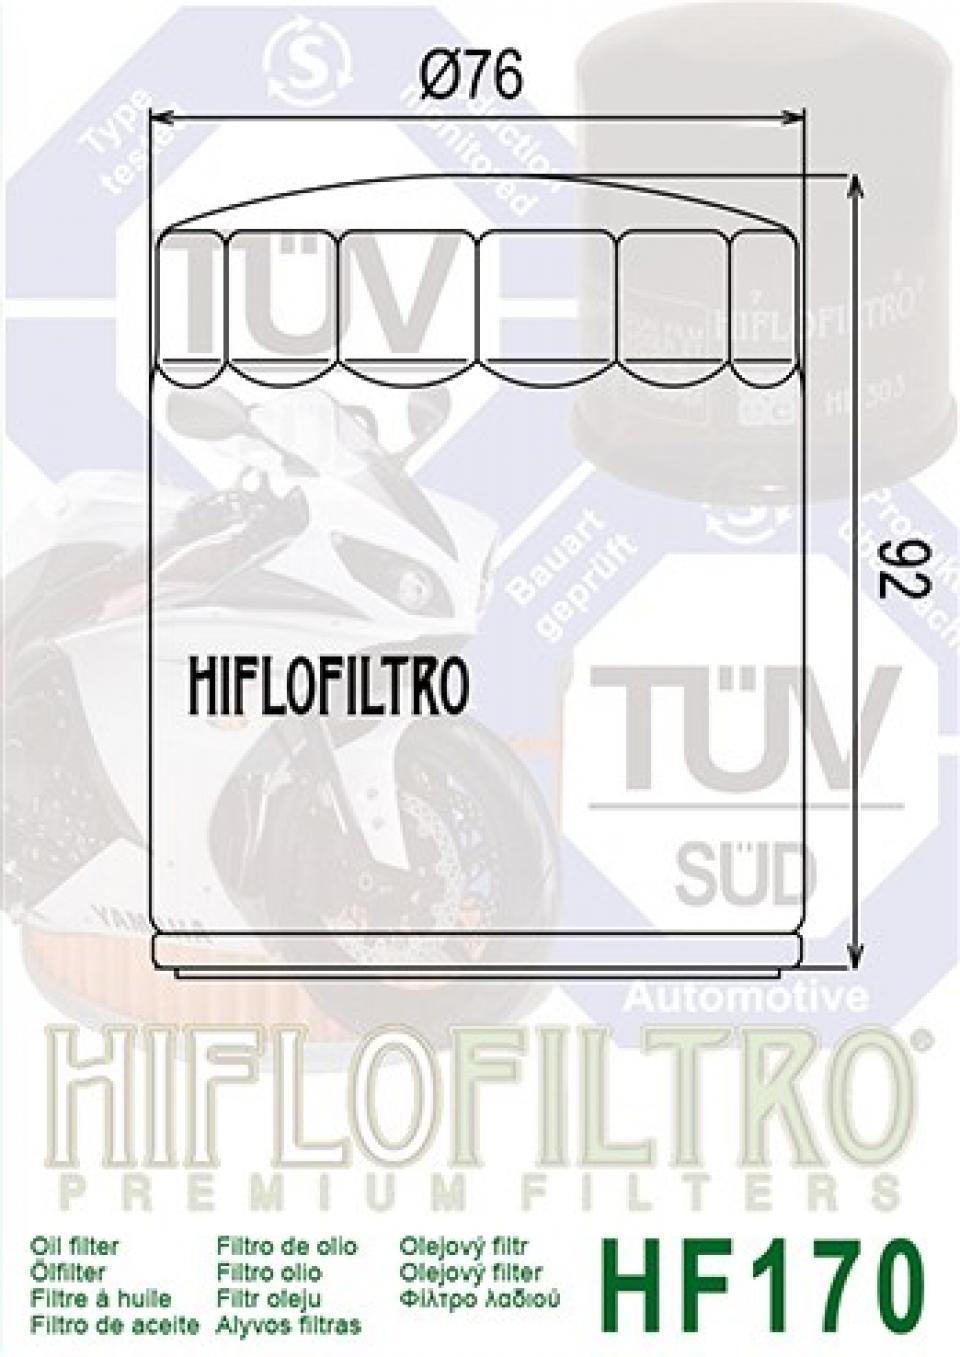 Filtre à huile Hiflofiltro pour Moto Harley Davidson 1690 Fltru Road Glide Ultra 2011 à 2012 Neuf